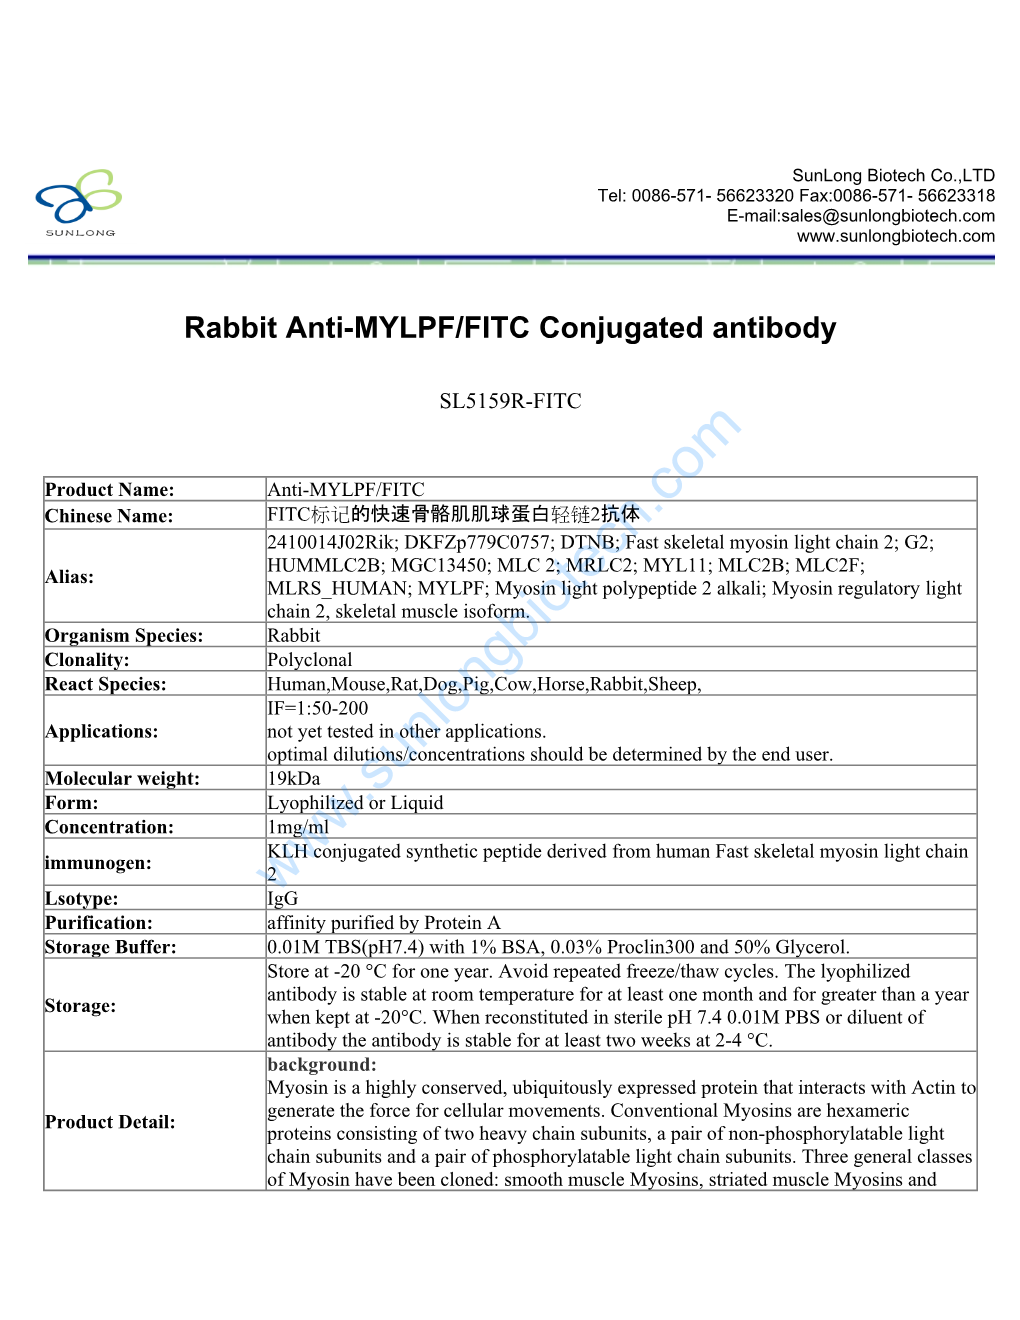 Rabbit Anti-MYLPF/FITC Conjugated Antibody